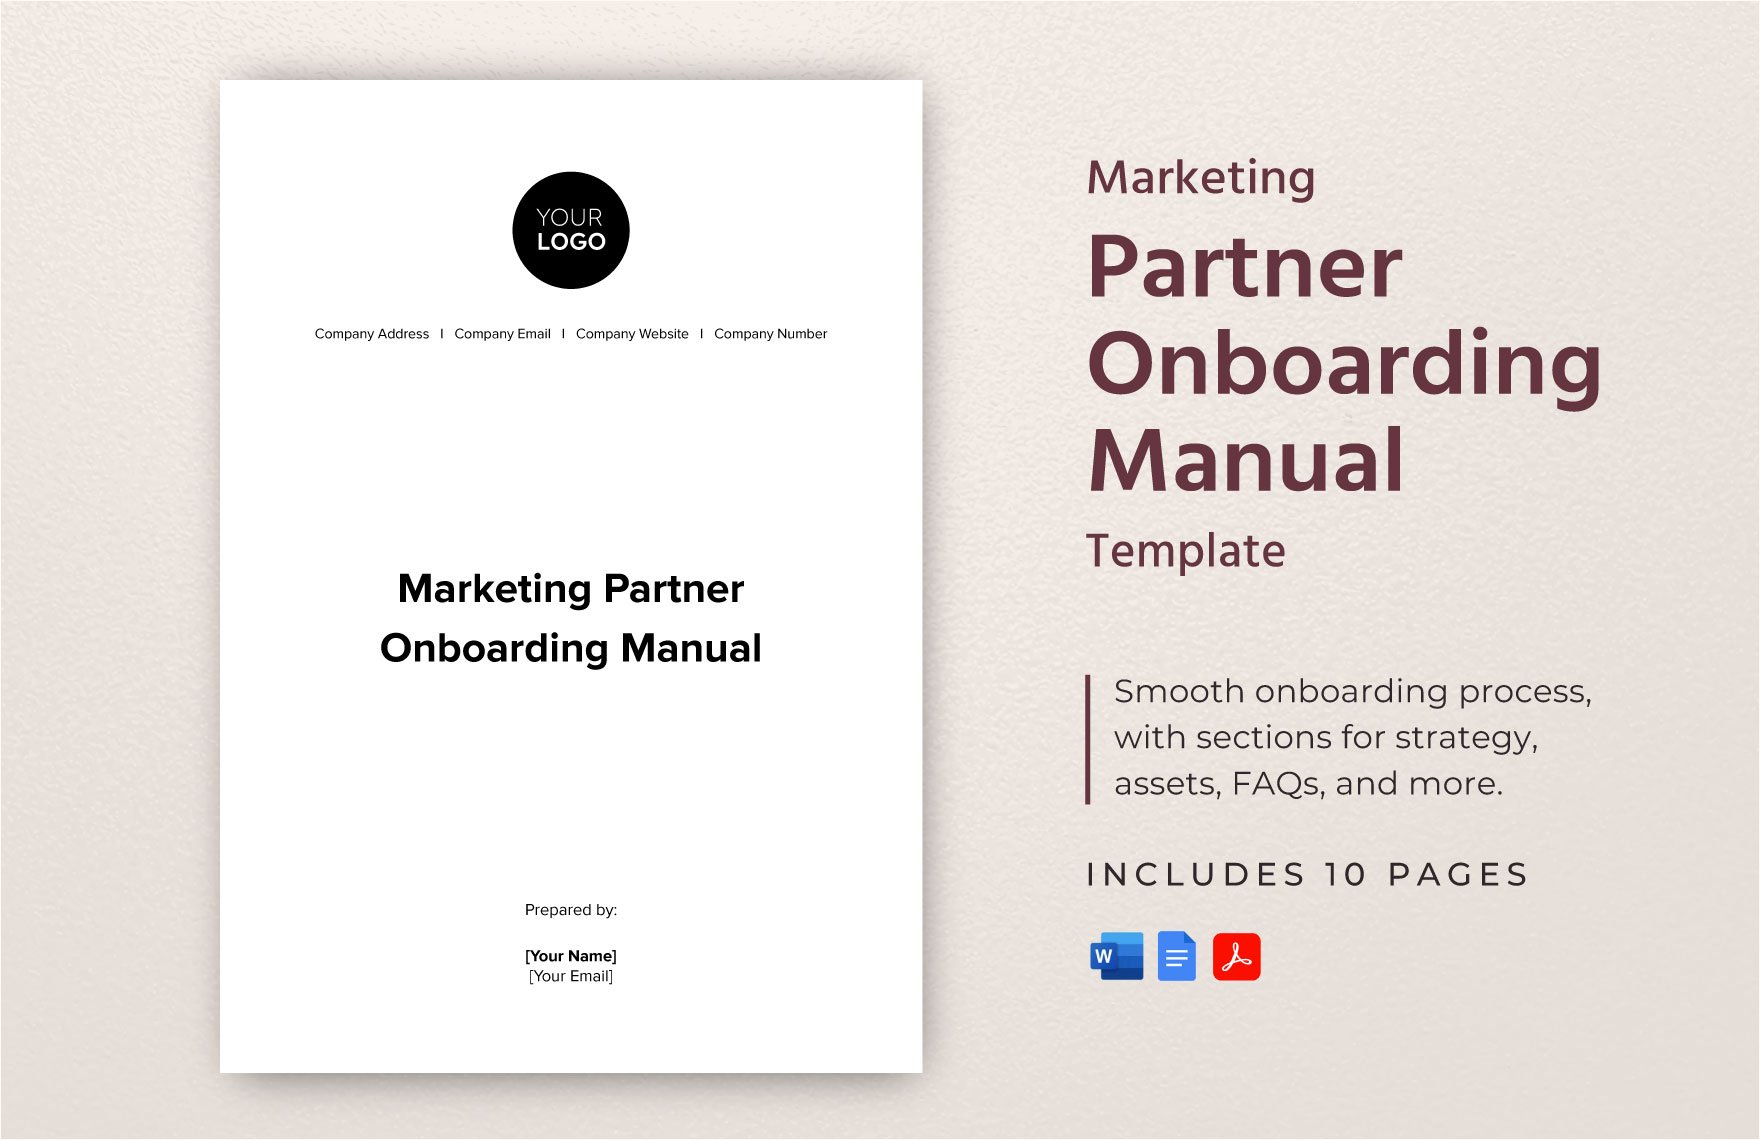 Marketing Partner Onboarding Manual Template in Word, Google Docs, PDF